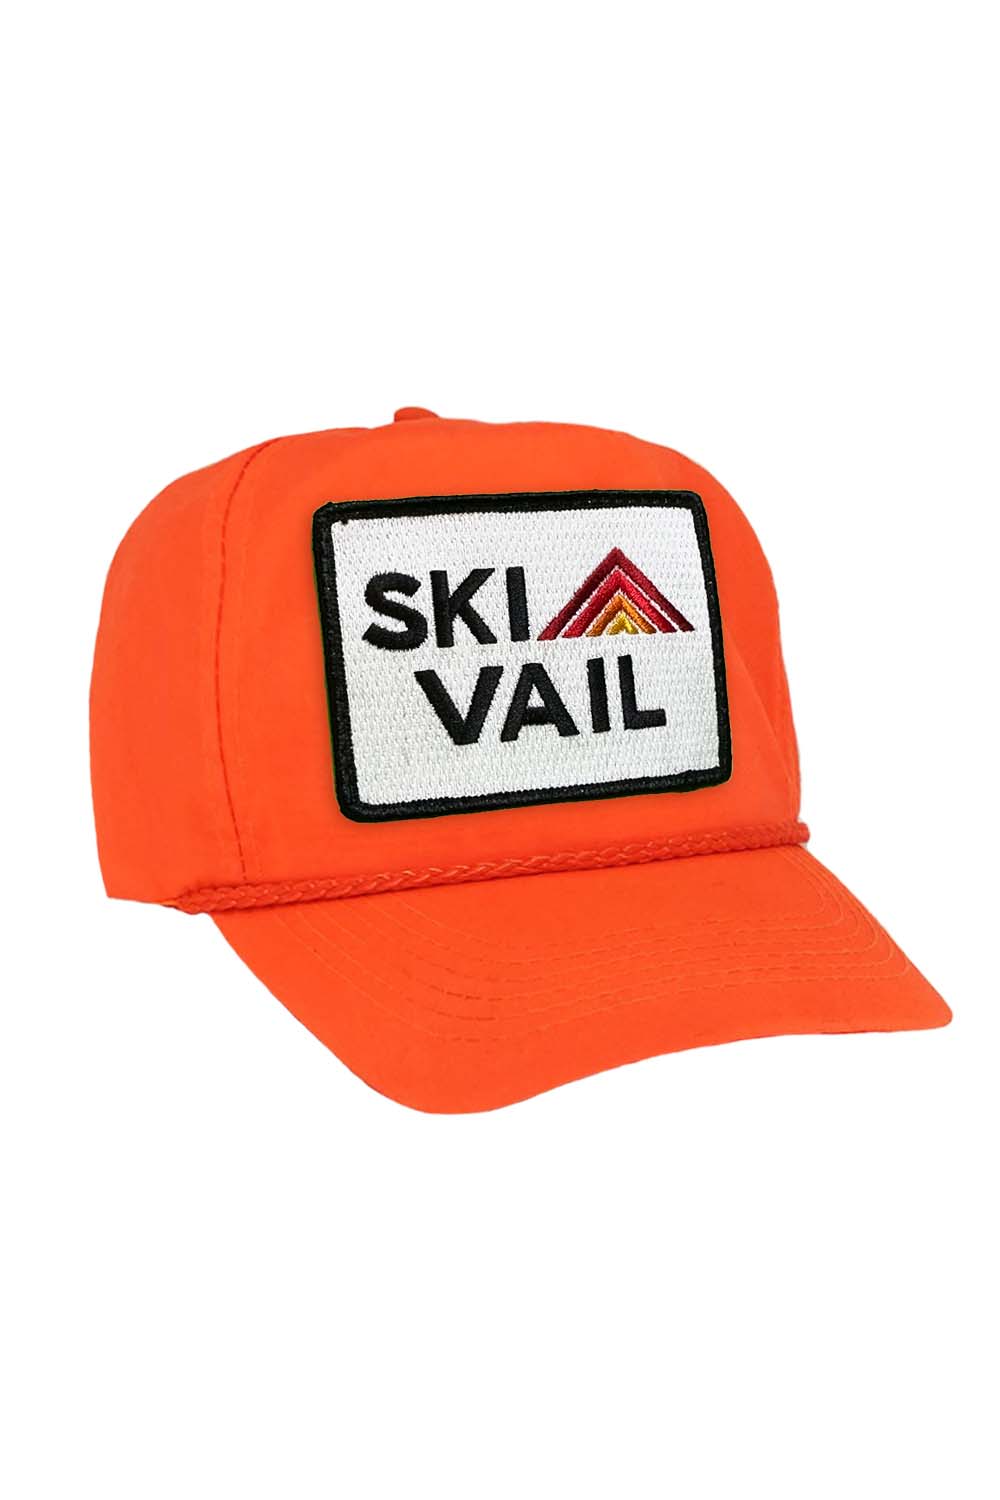 SKI VAIL - VINTAGE NYLON TRUCKER HAT HATS Aviator Nation NEON ORANGE 